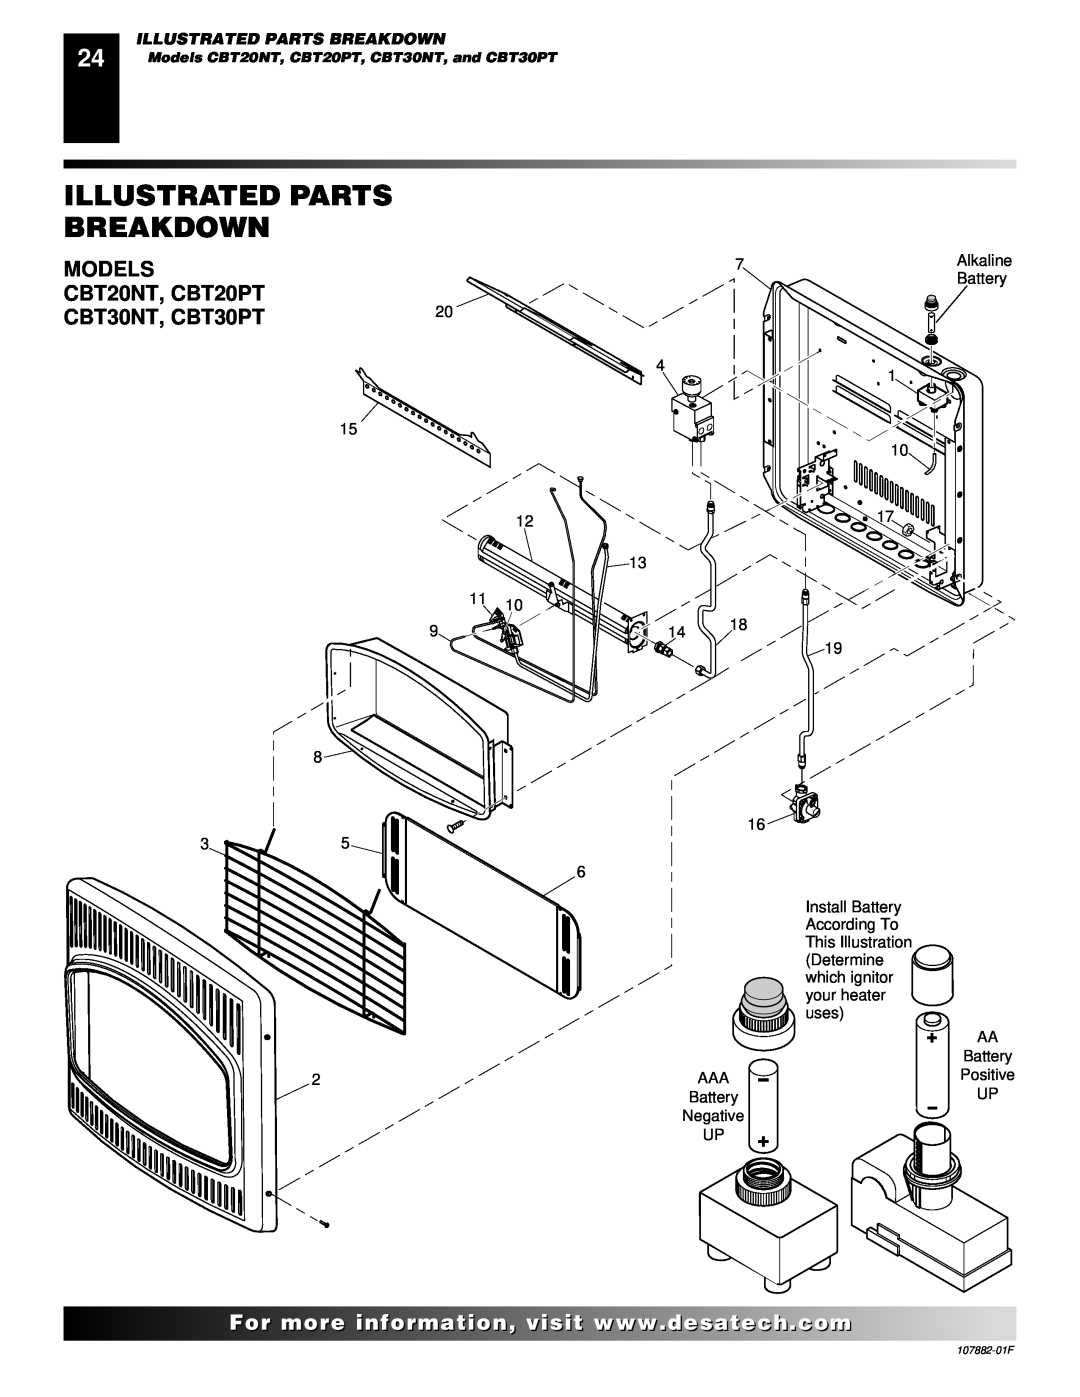 Desa CBN20 installation manual Illustrated Parts Breakdown, Models, CBT20NT, CBT20PT, CBT30NT, CBT30PT 